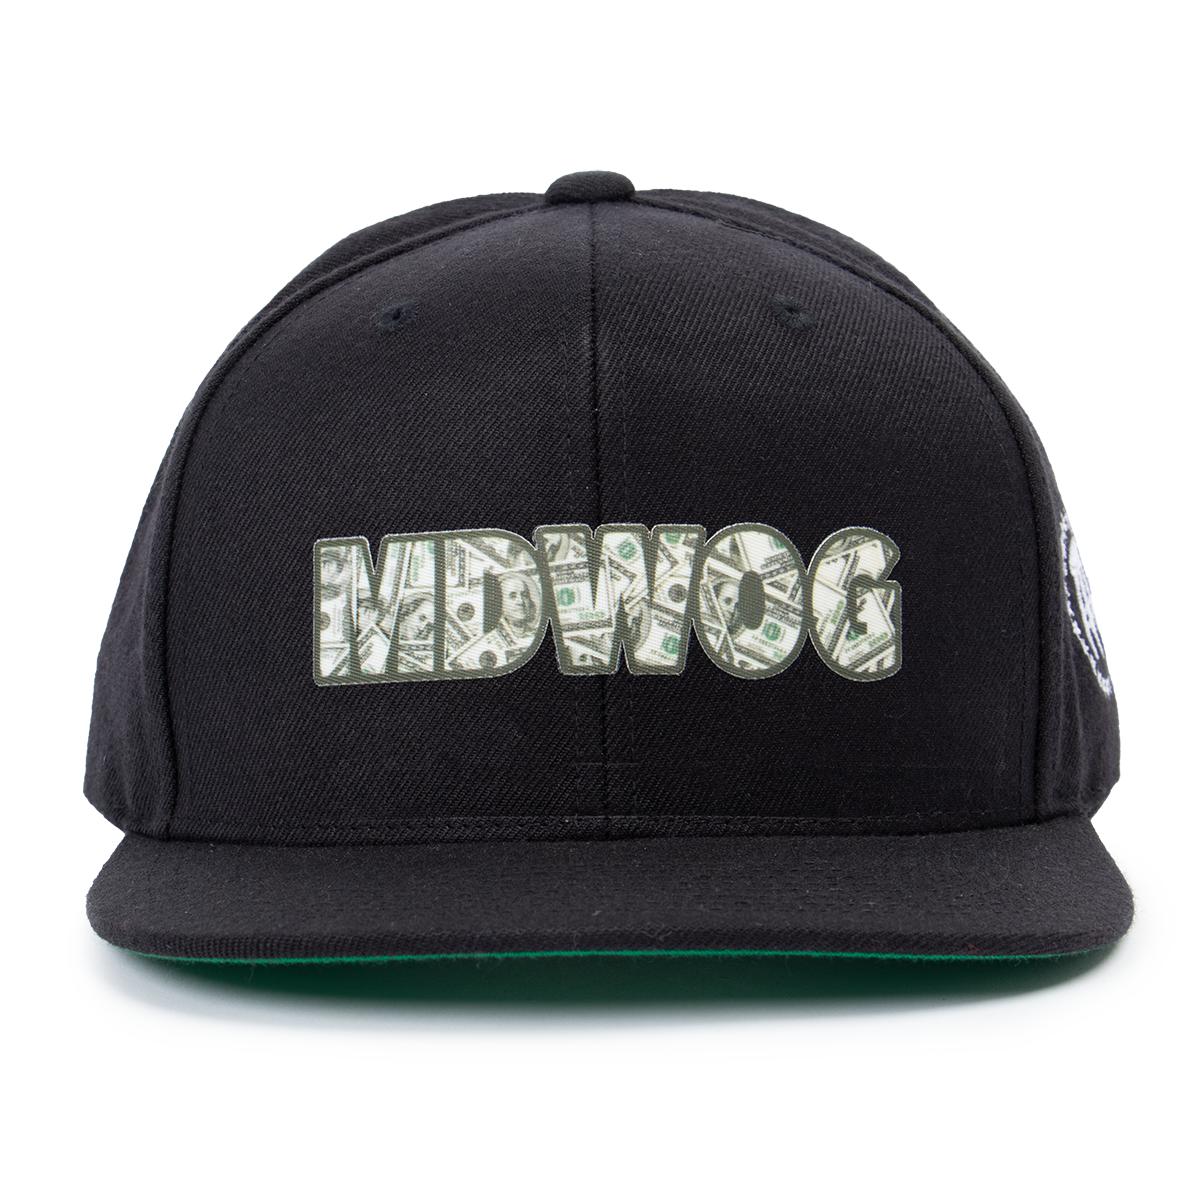 MDWOG Money Snapback Hat-Hats-Million Dollaz Worth of Game-Black-One Size-Barstool Sports